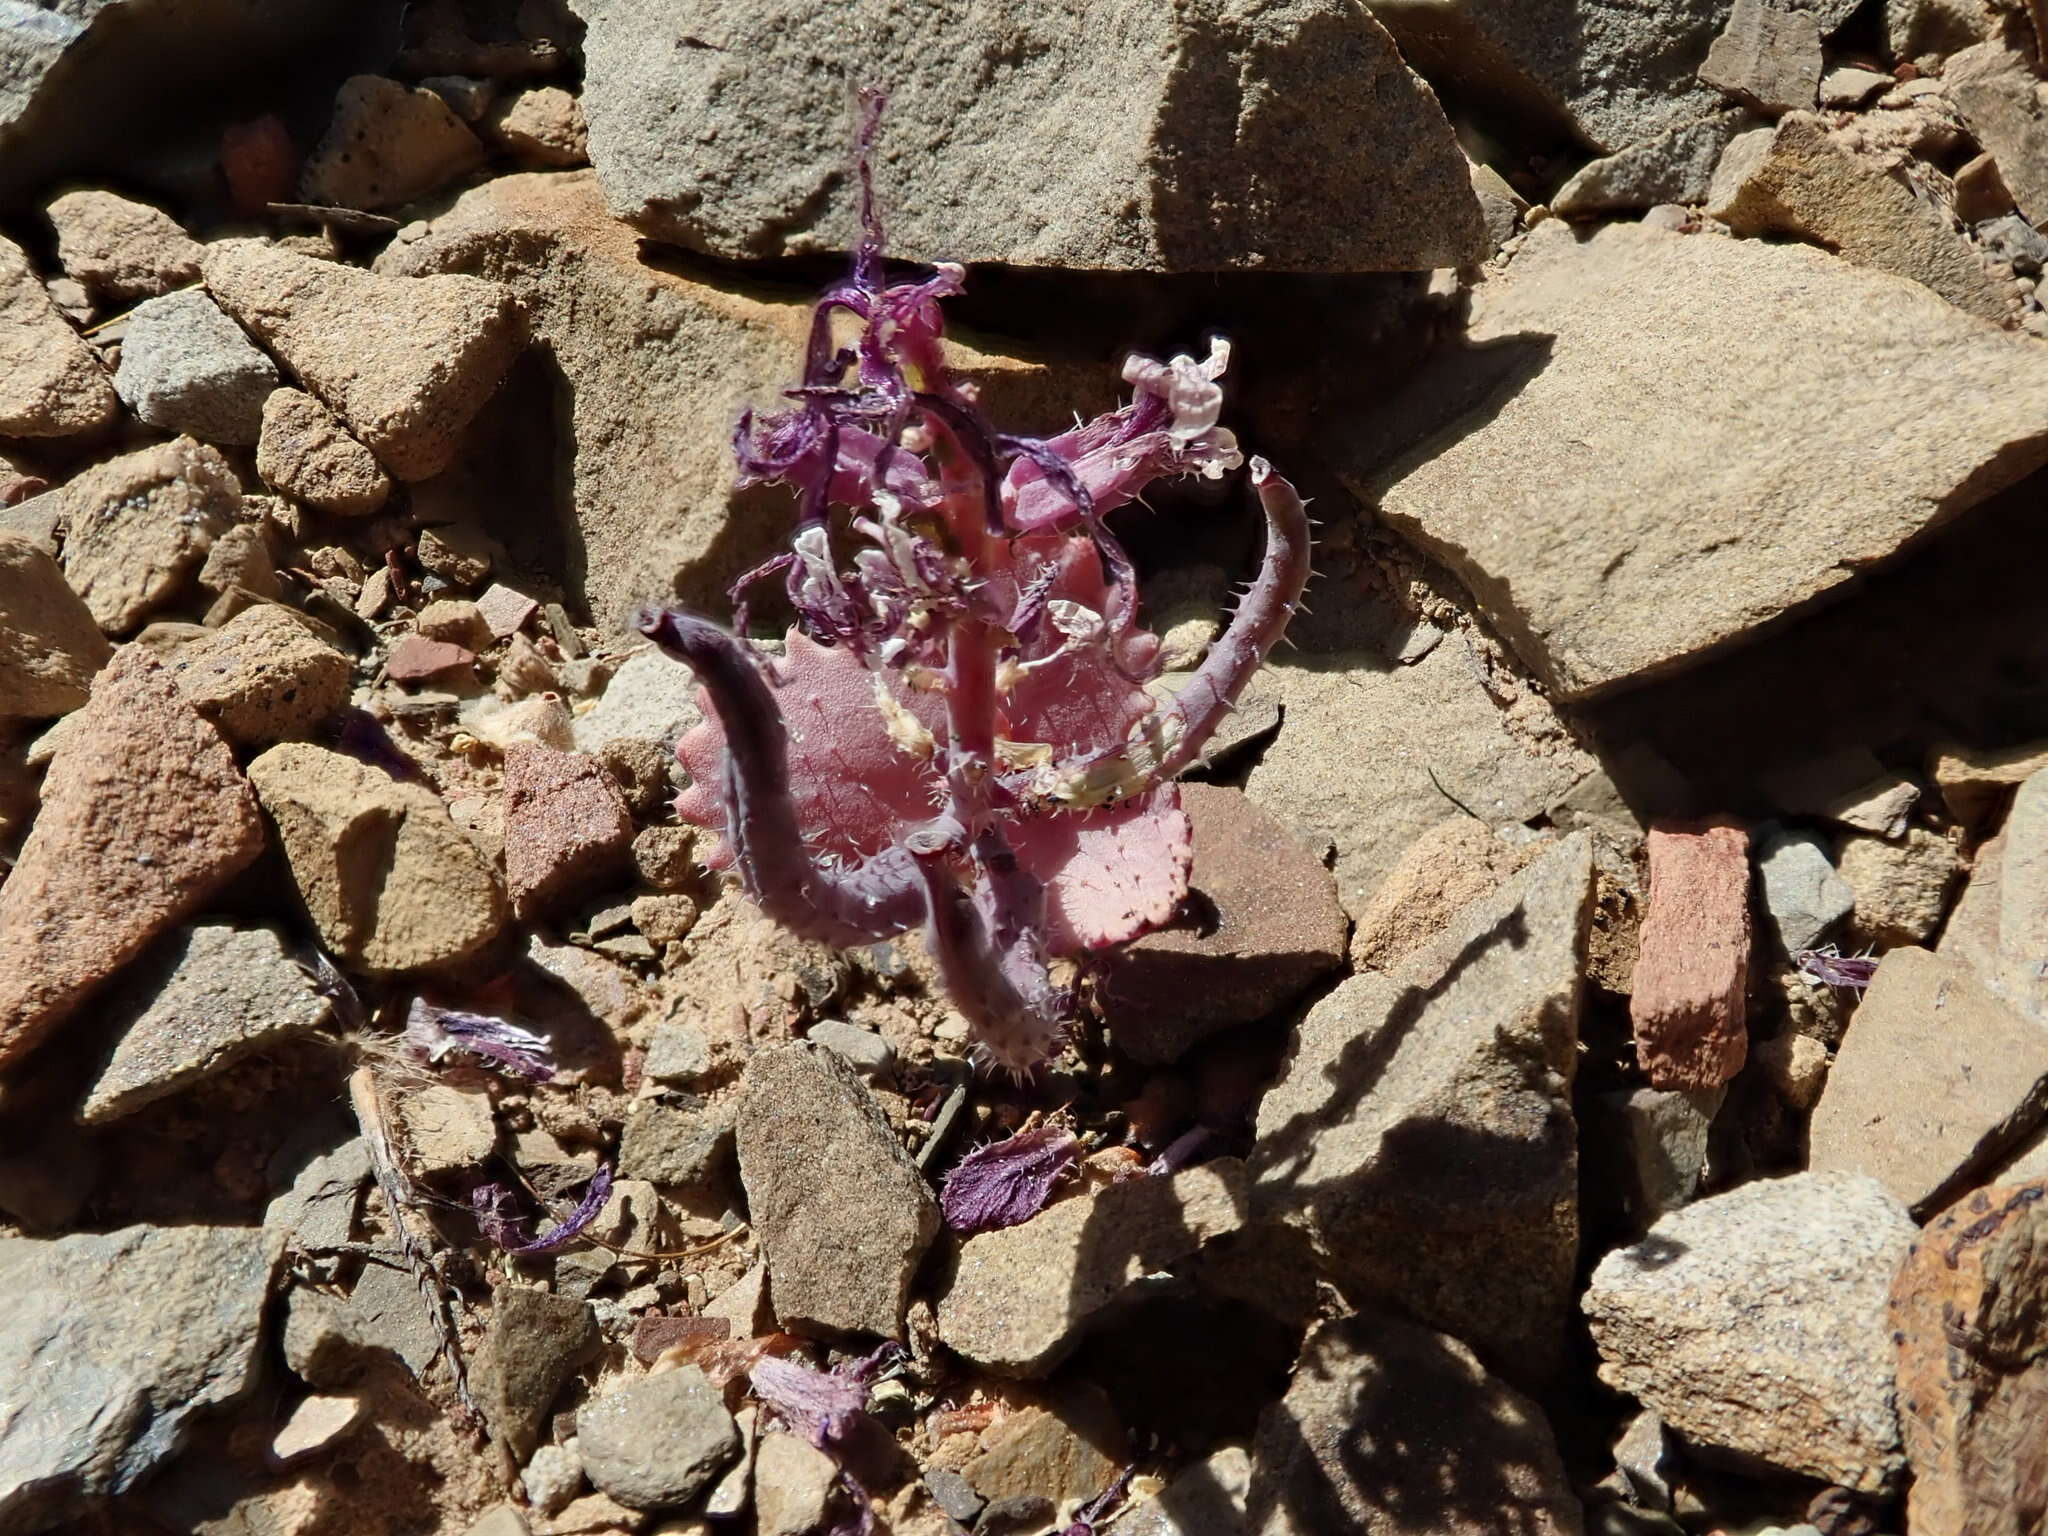 Image of Mt. Hamilton jewelflower